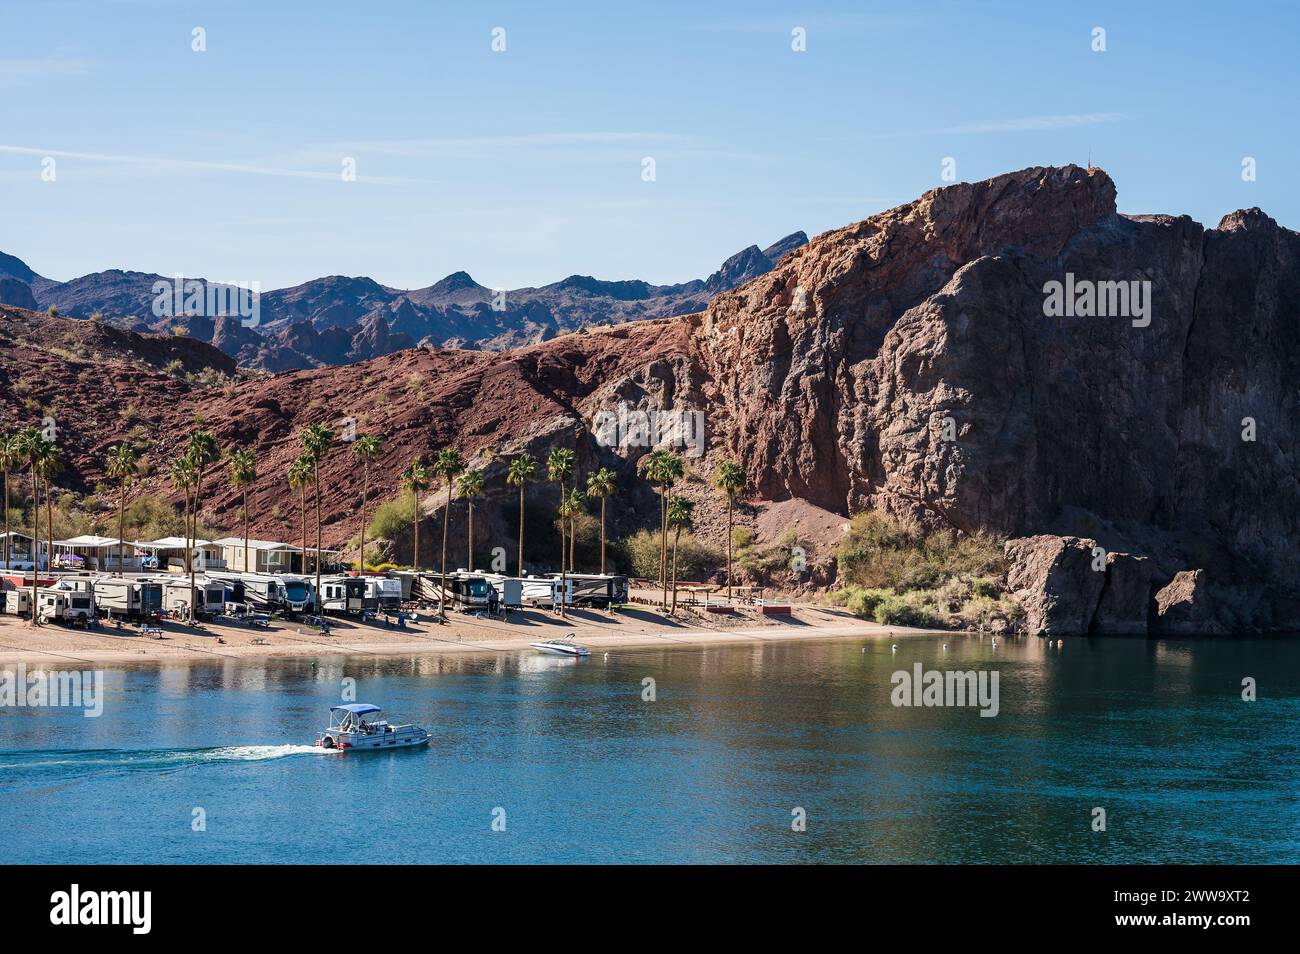 Campgrounds and resorts along the Colorado River below the Parker Dam.  California - Arizona border. Stock Photo